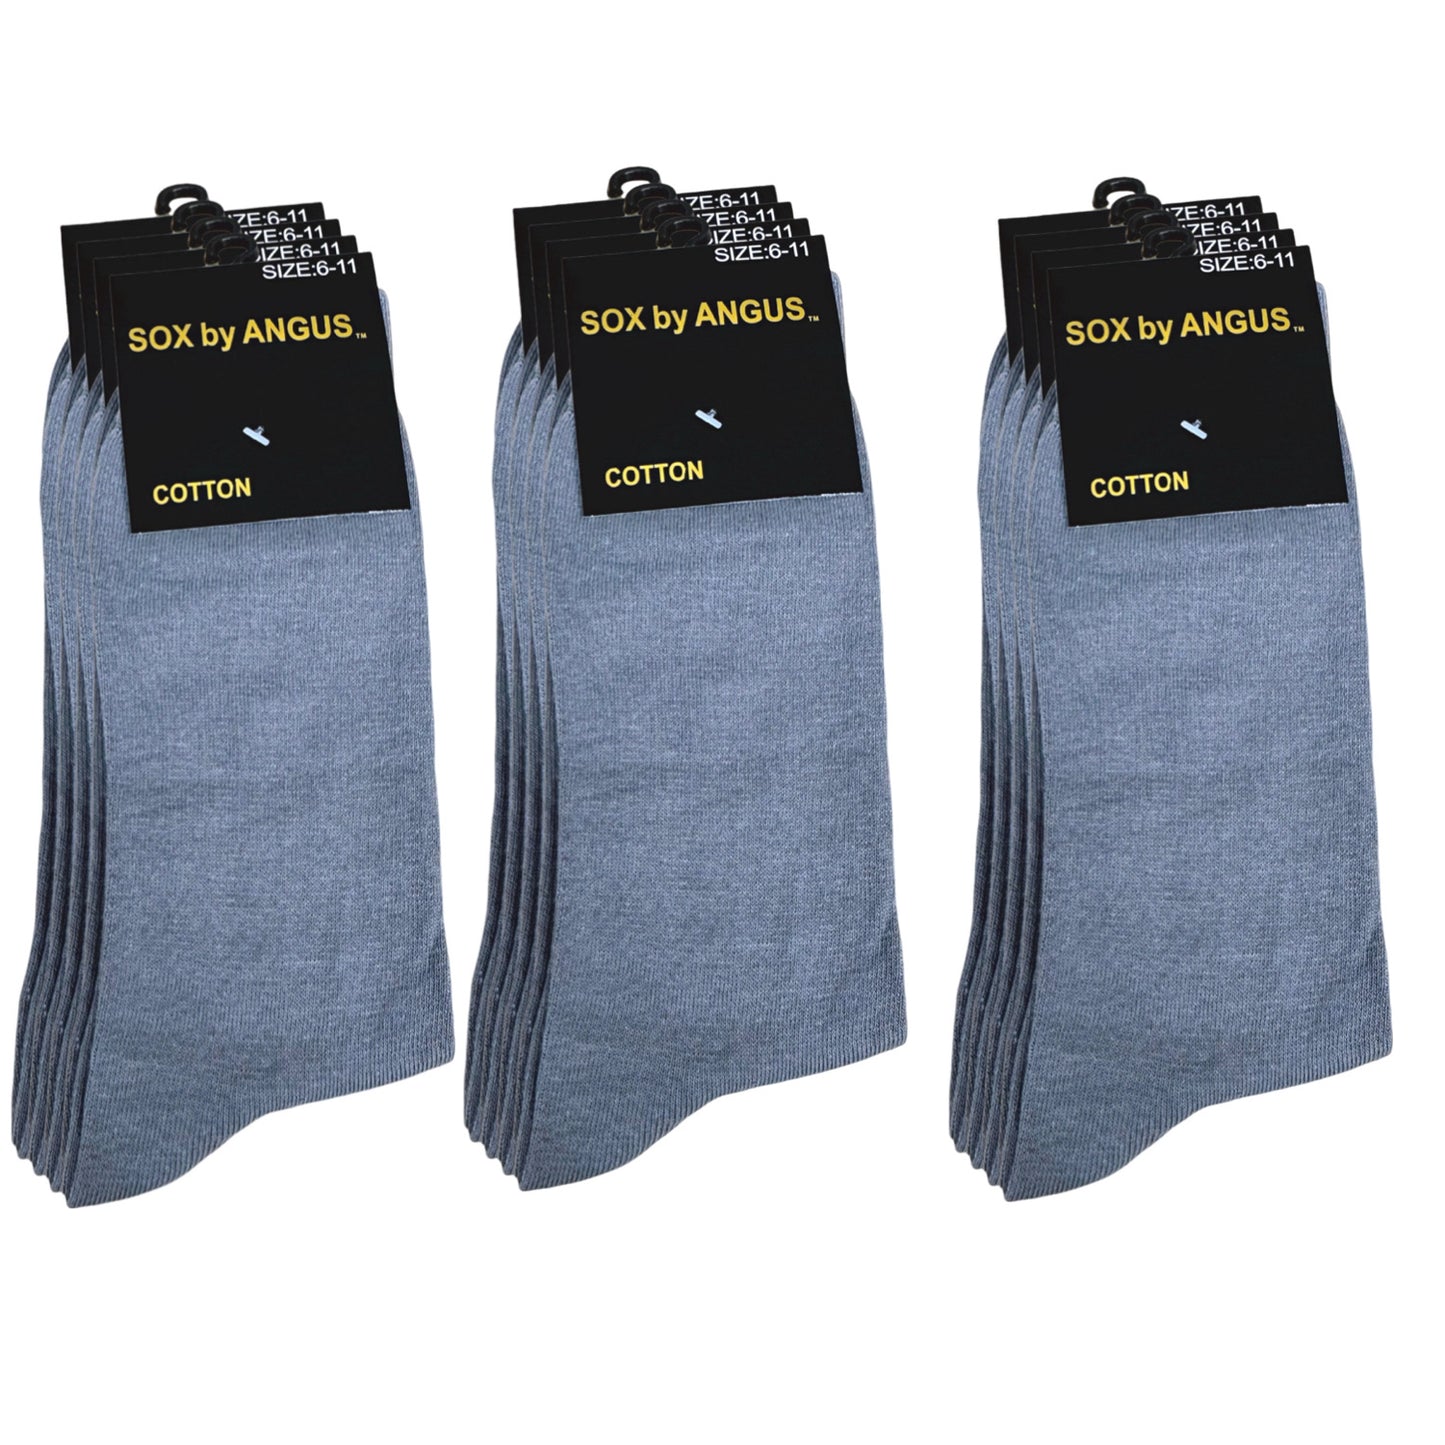 Cotton Plain Business Socks - Grey